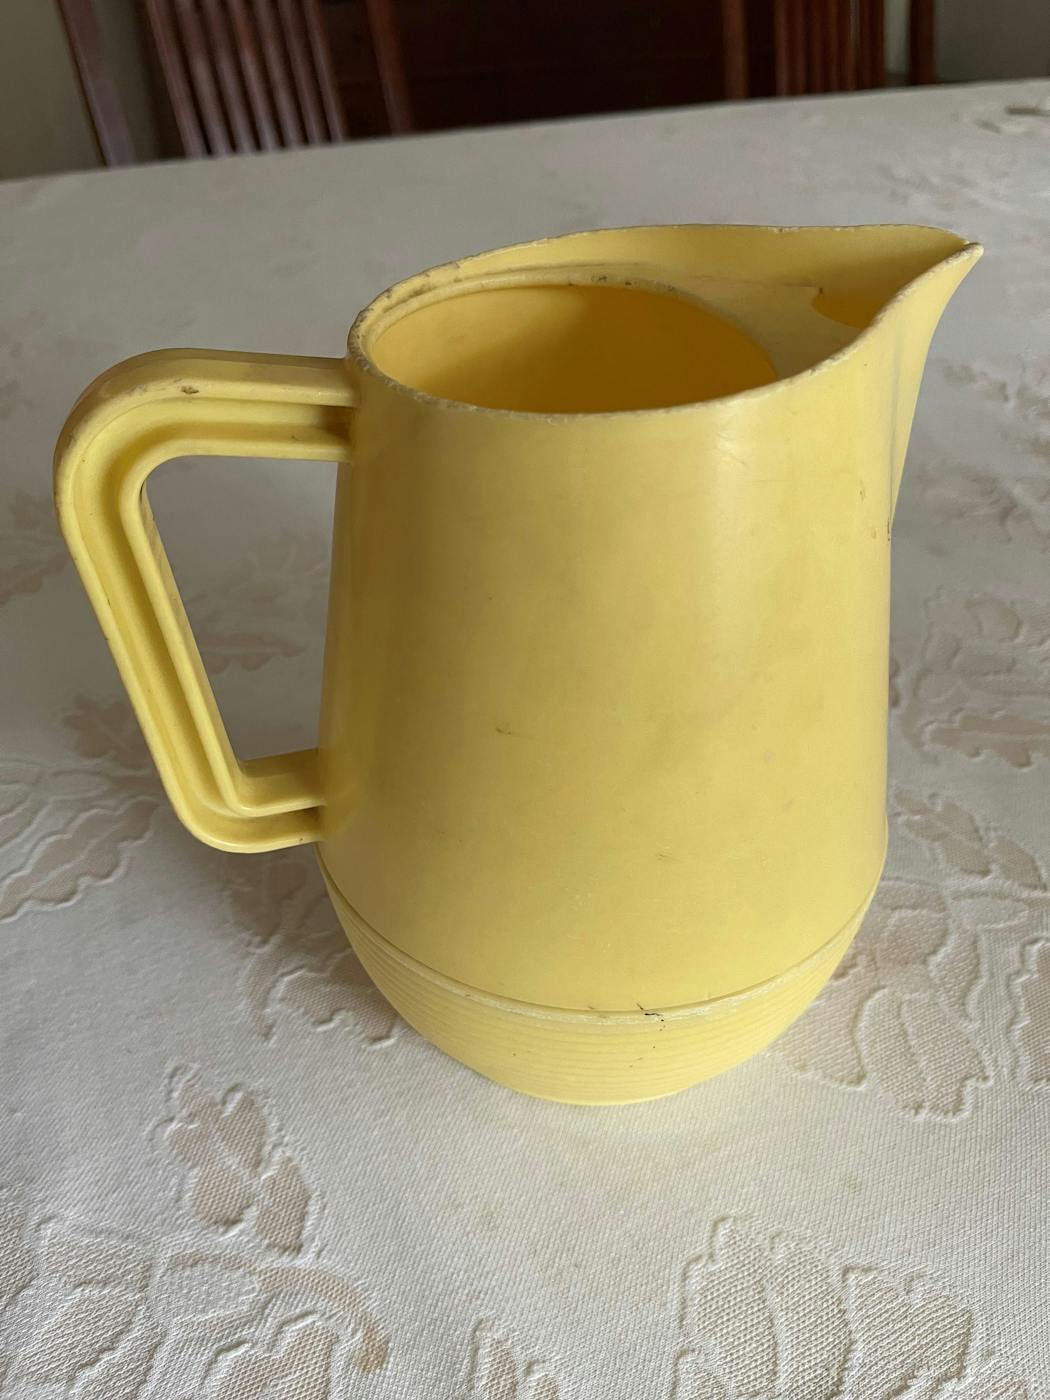 The treasured yellow Melmac pitcher. 